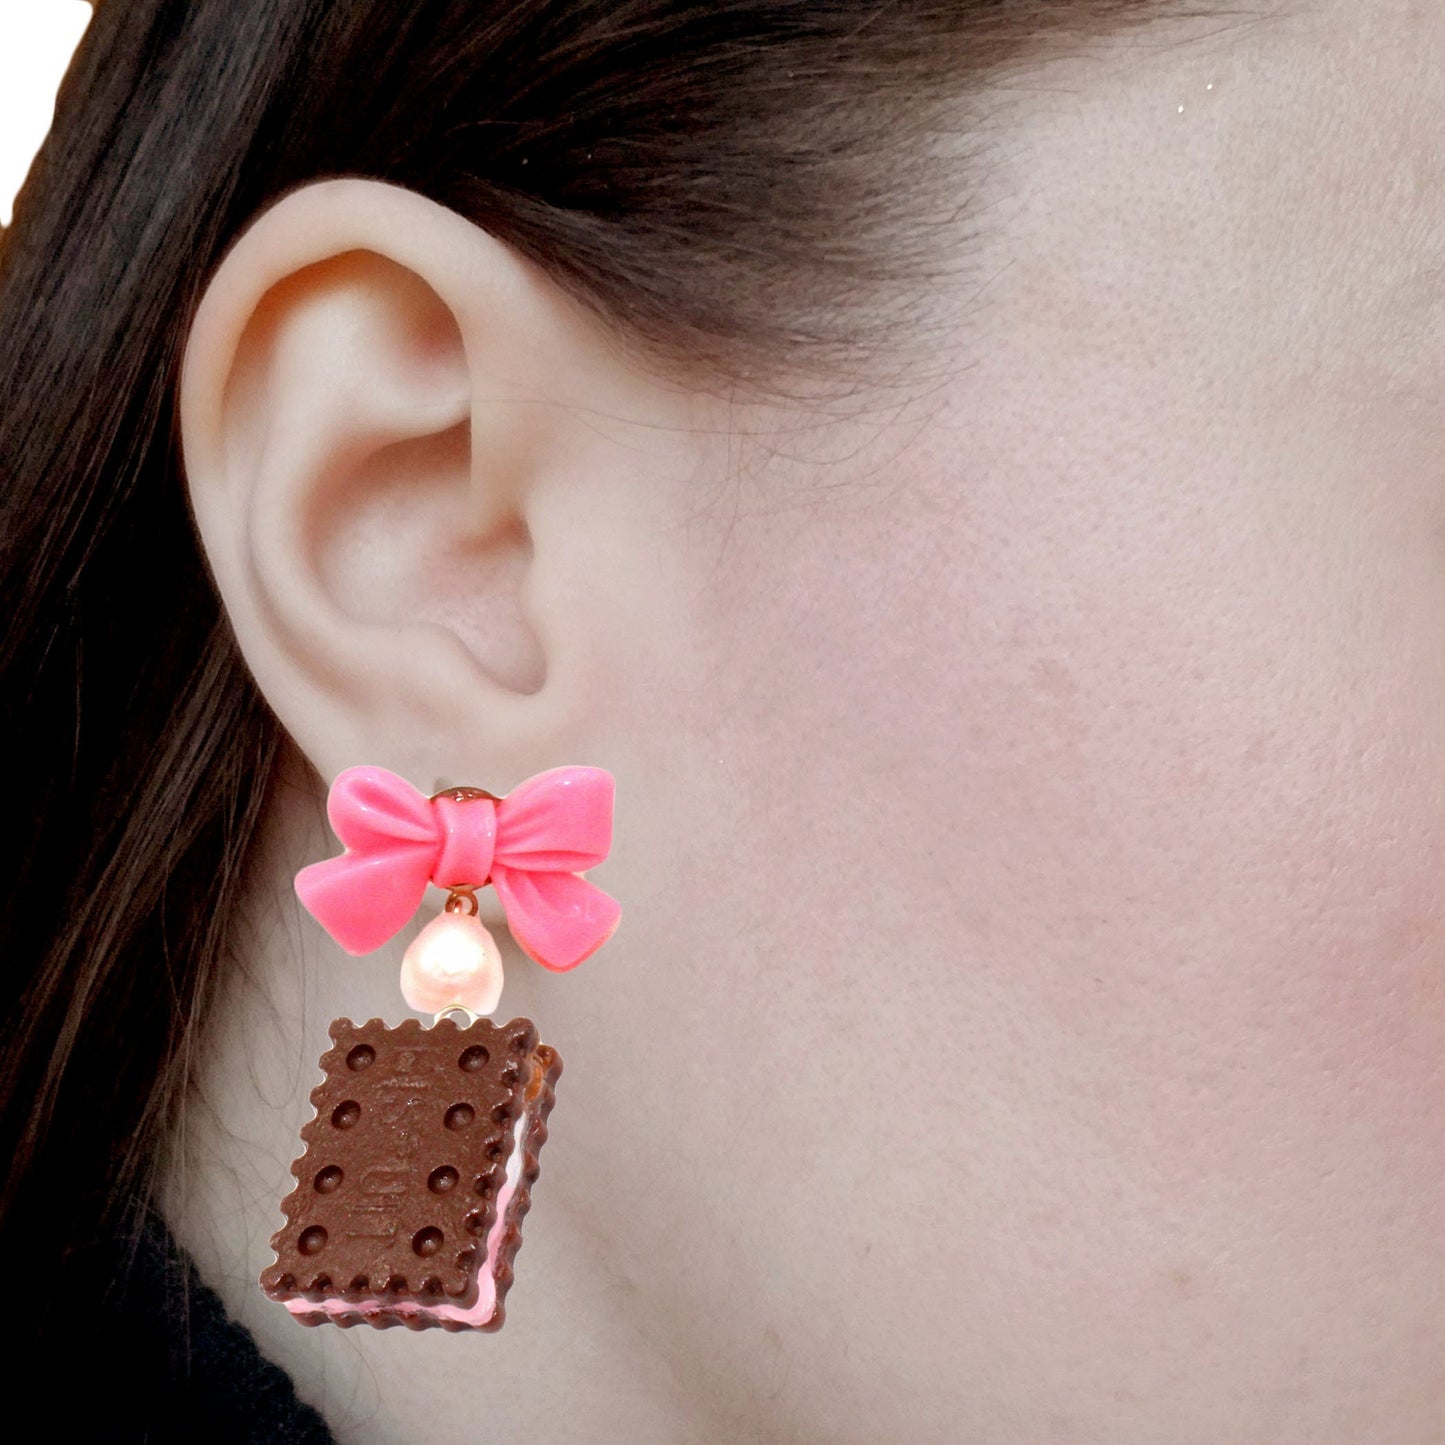 Neapolitan Ice Cream Sandwich Earrings - Hypoallergenic Steel - Fatally Feminine Designs